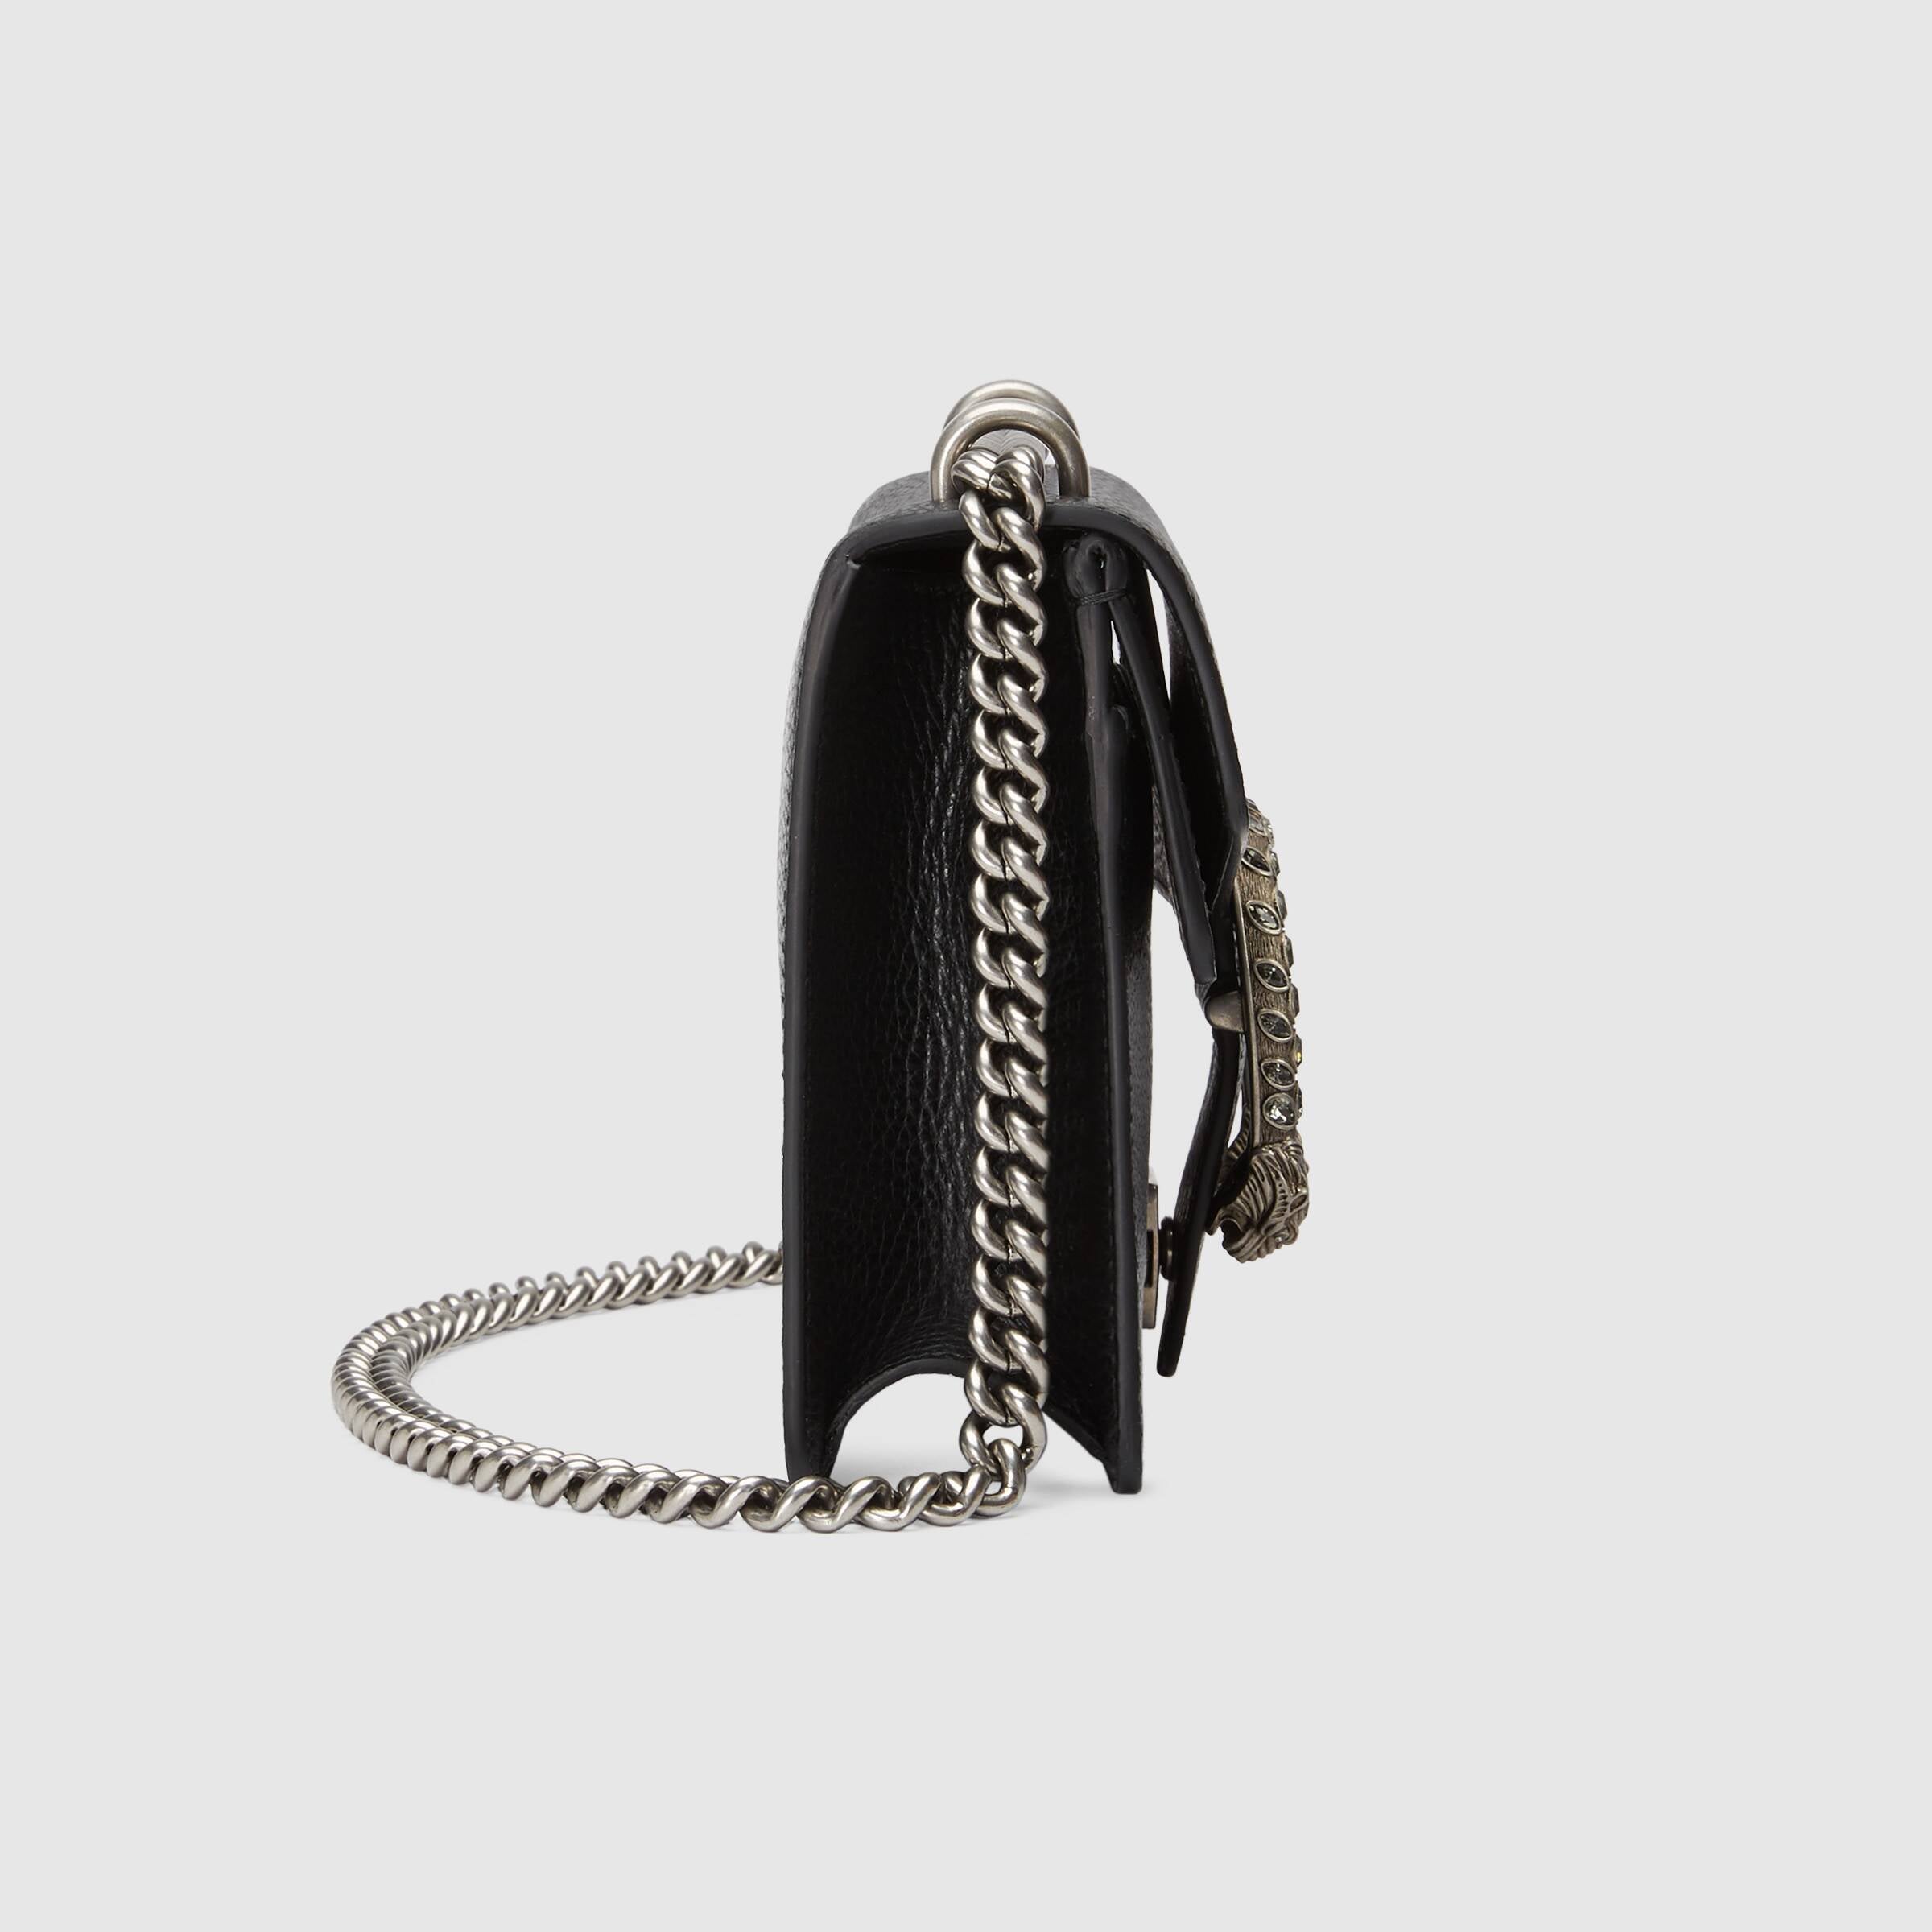 Gucci Dionysus Leather Mini Bag Black